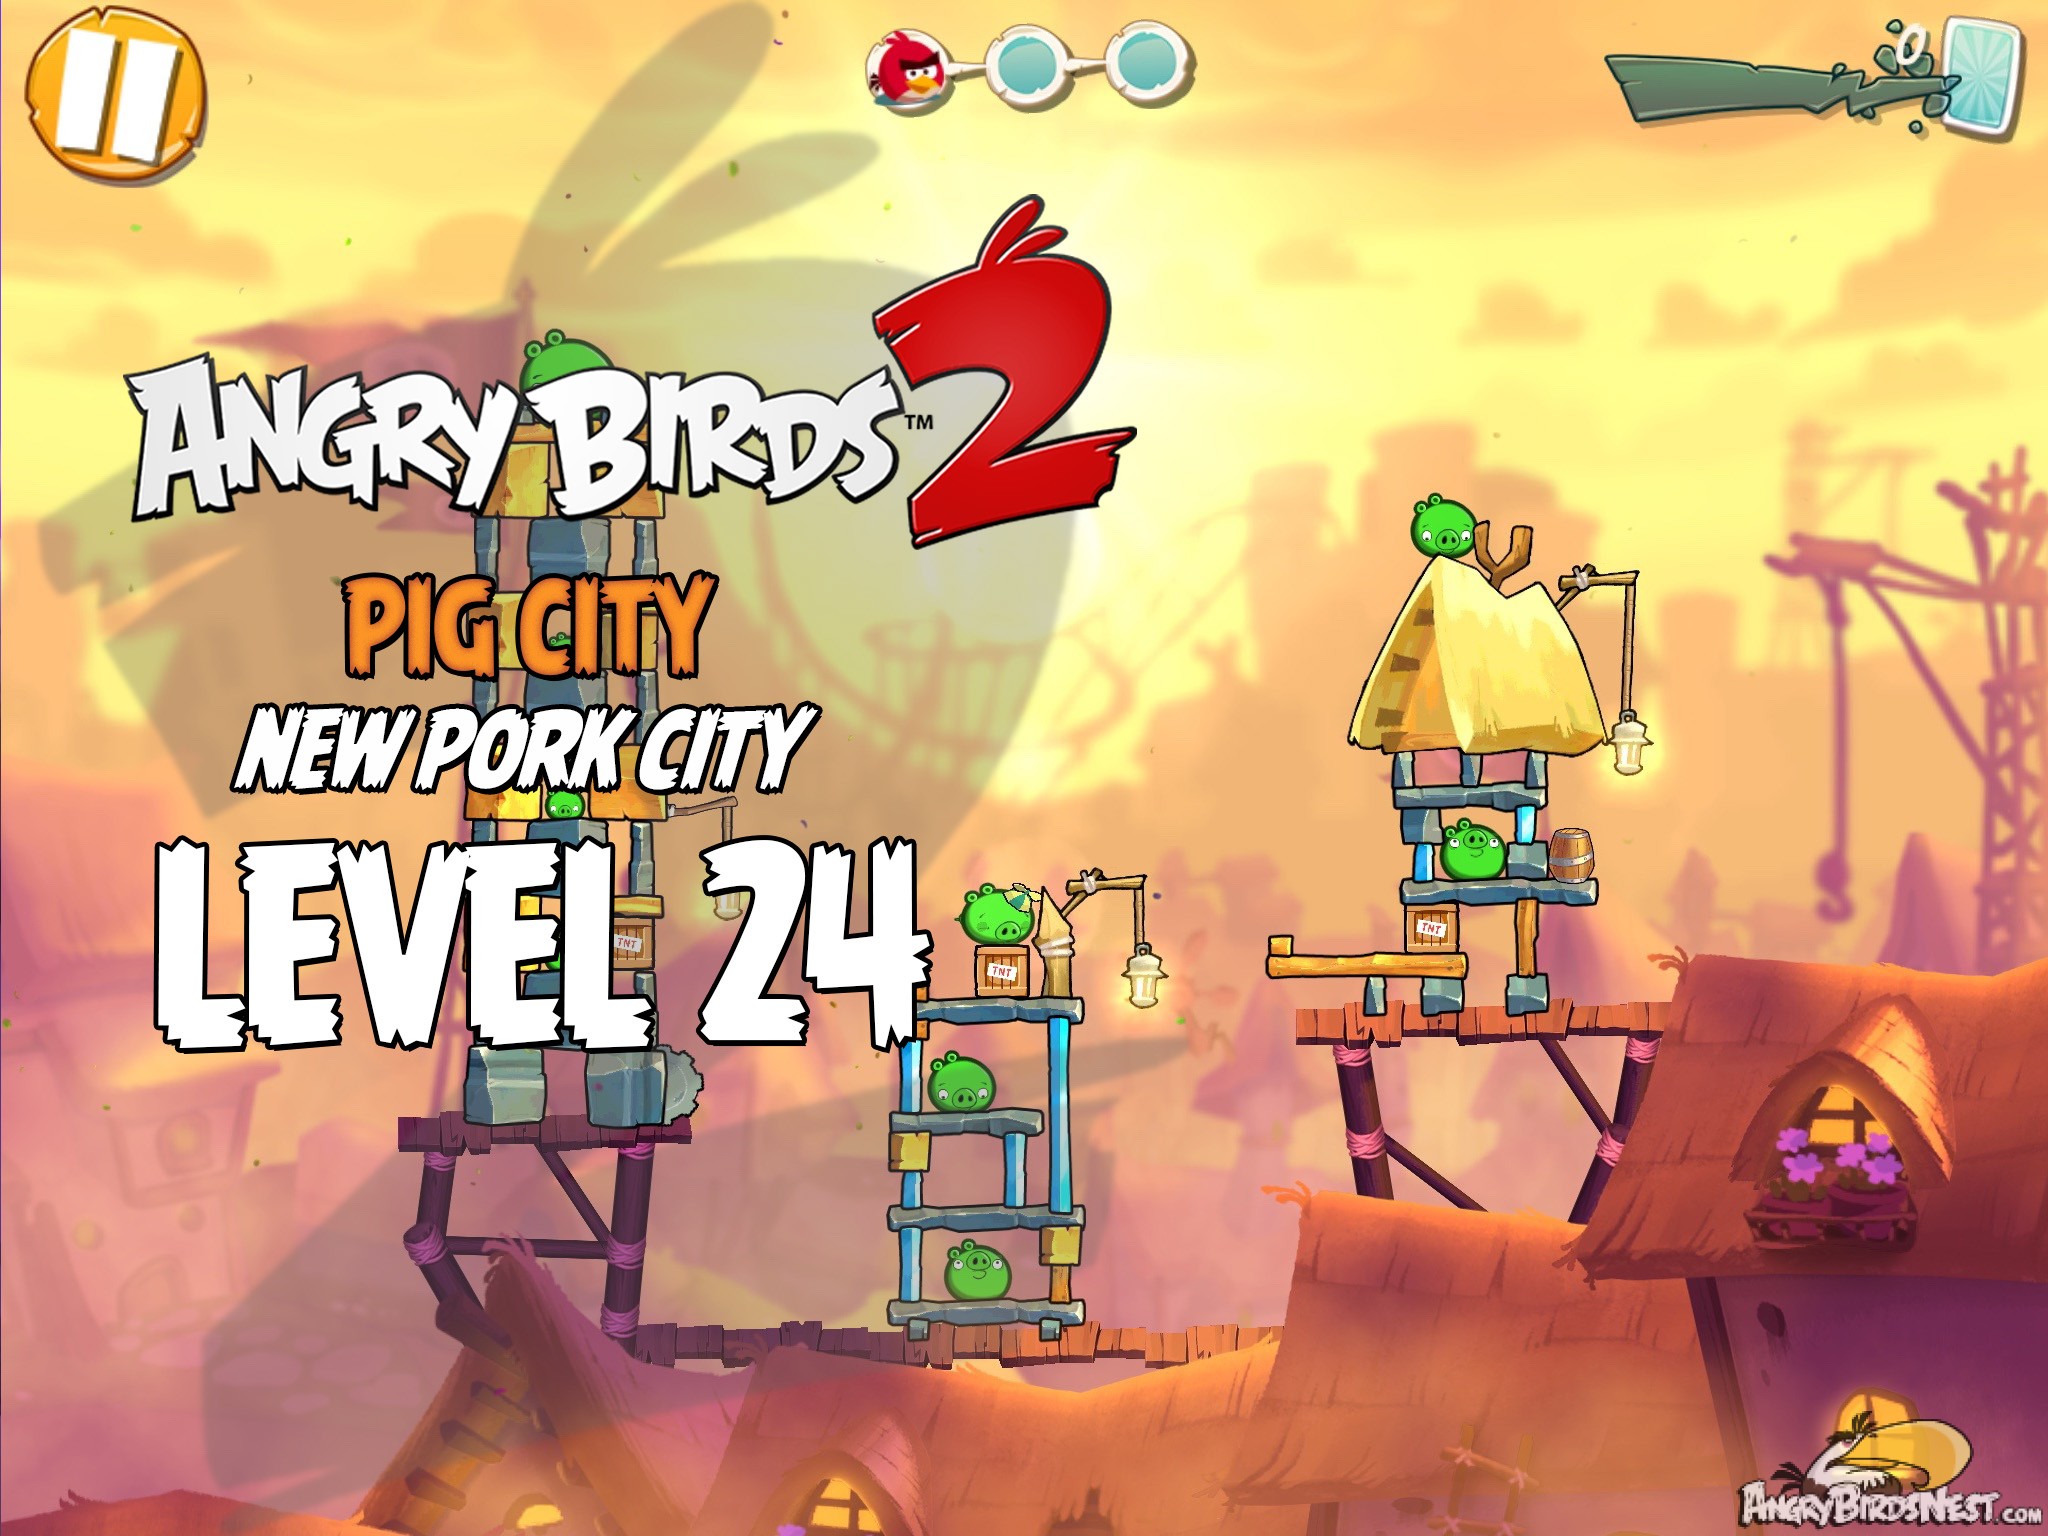 angry-birds-2-level-24-pig-city-new-pork-city-3-star-walkthrough-angrybirdsnest